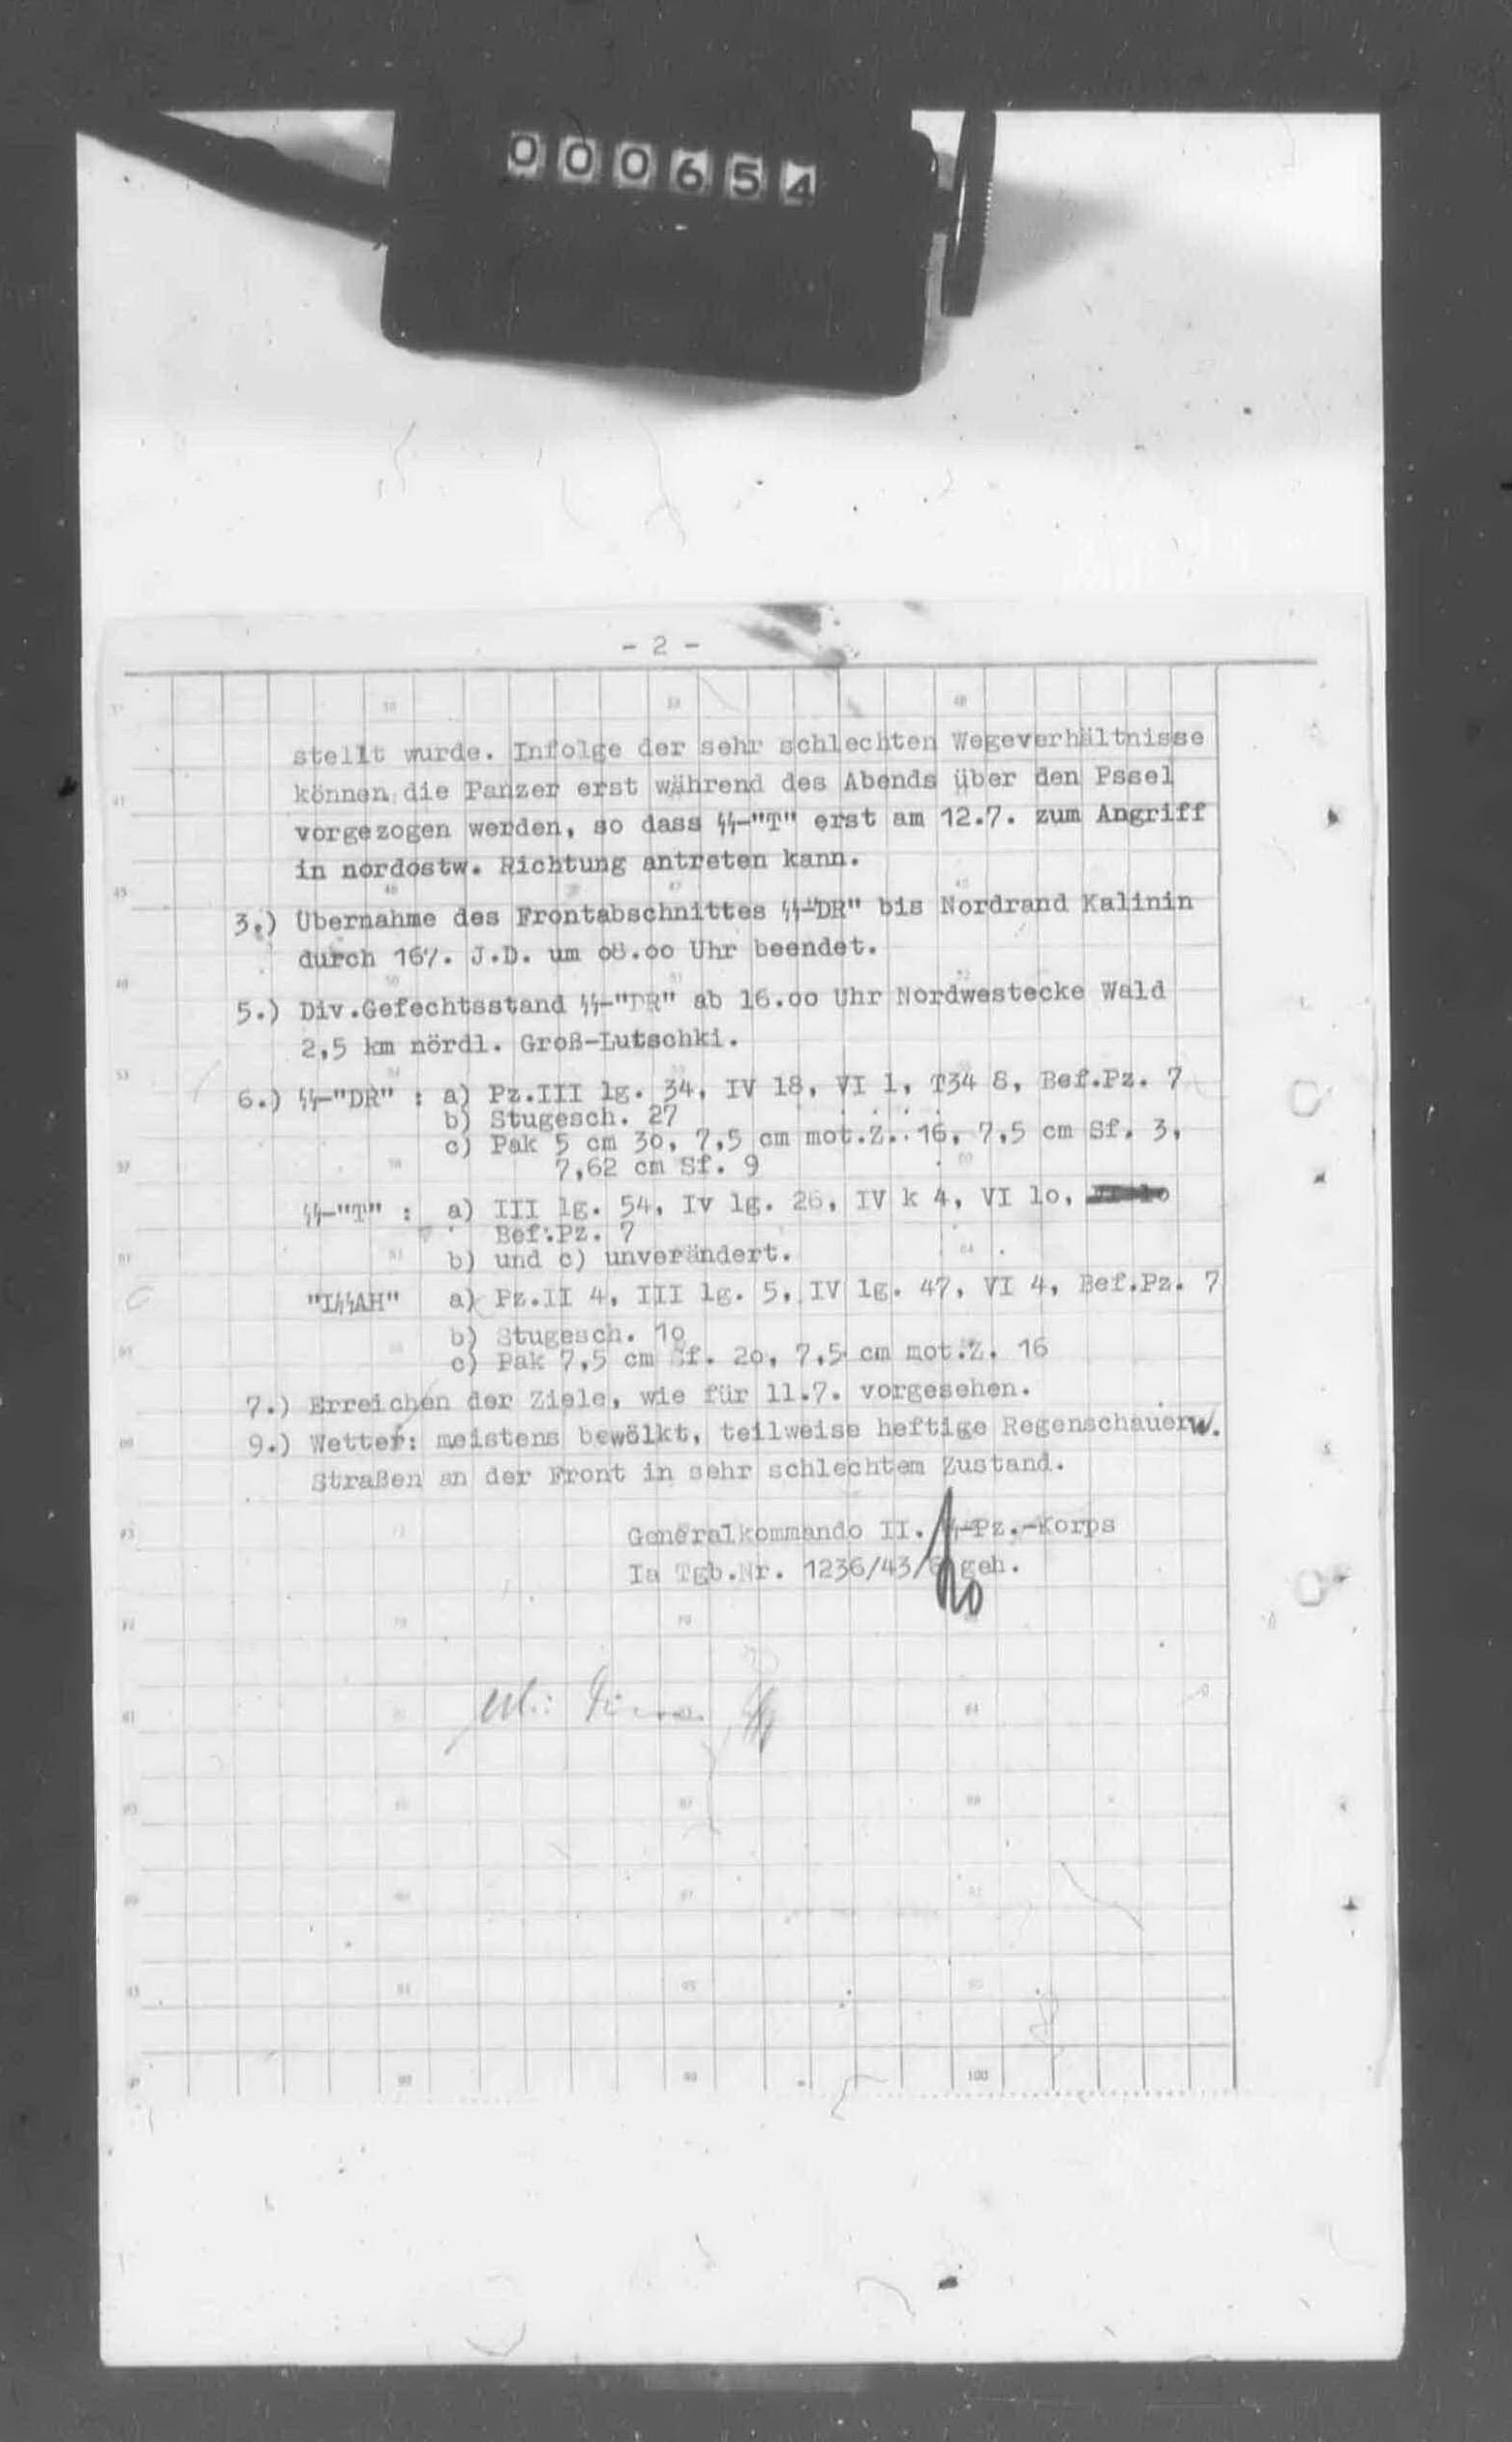 II. SS-Panzerkorps: Tagesmeldung vom 11.7.1943, 19:25. - PAGE 2